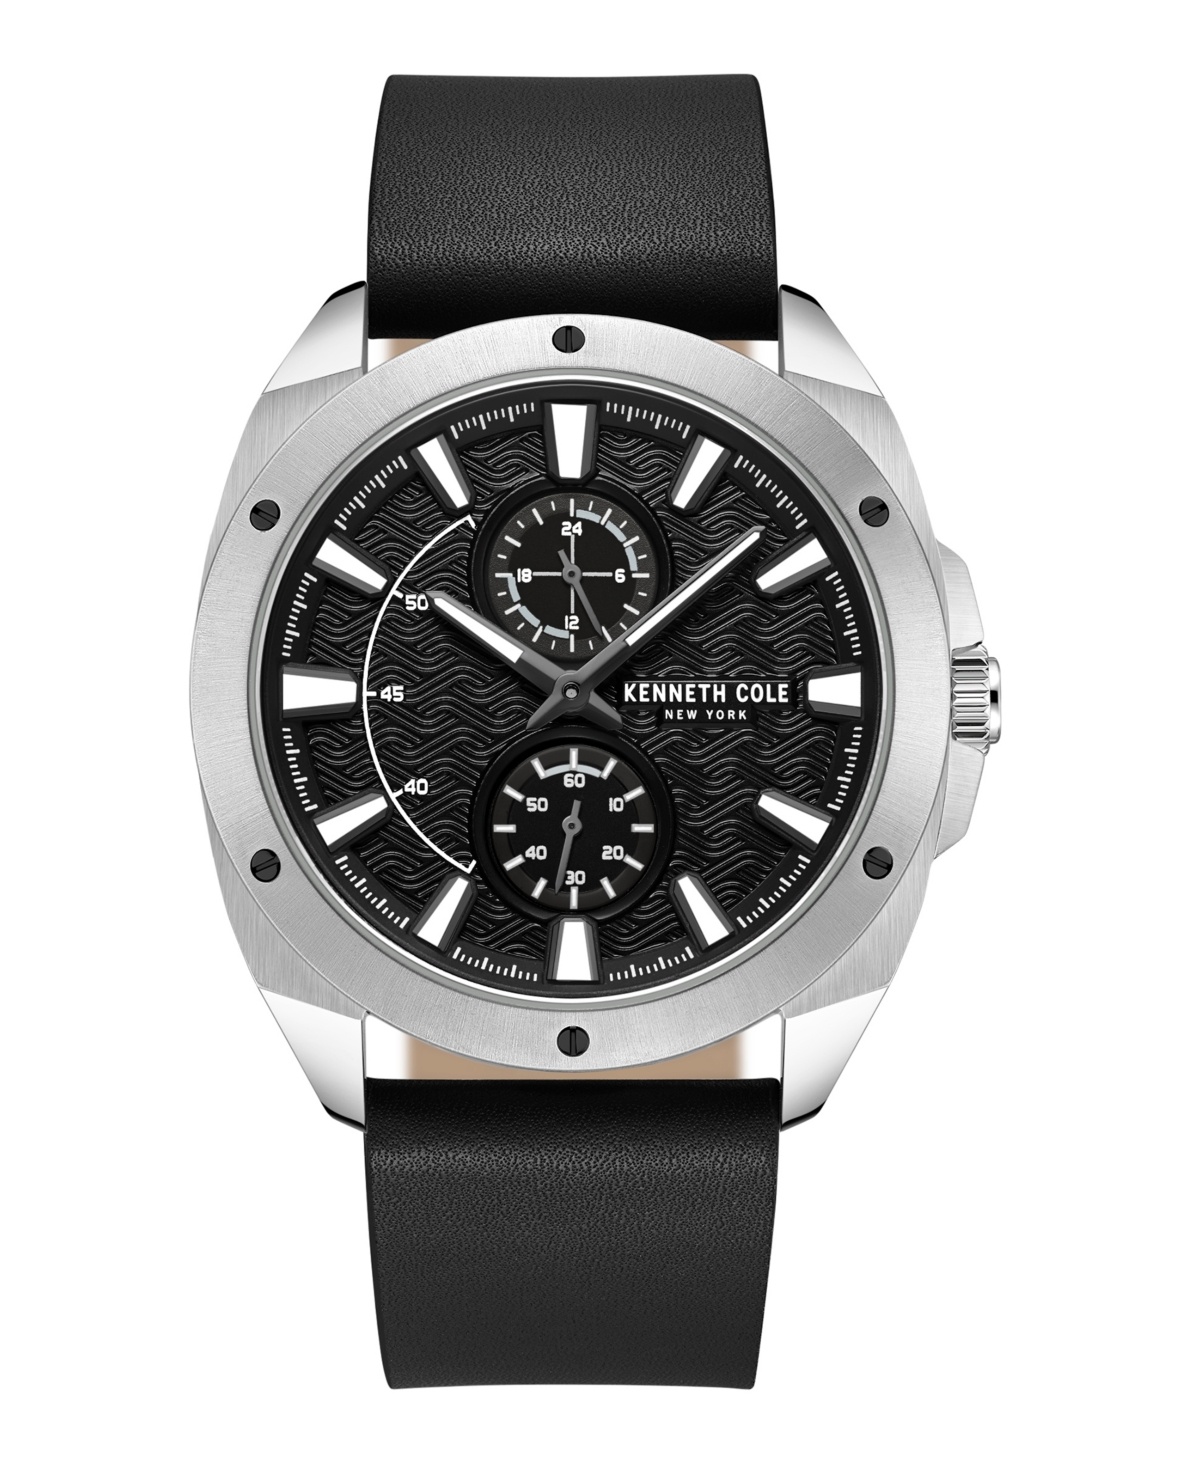 Kenneth Cole New York Dress Black Genuine Leather Watch 43mm